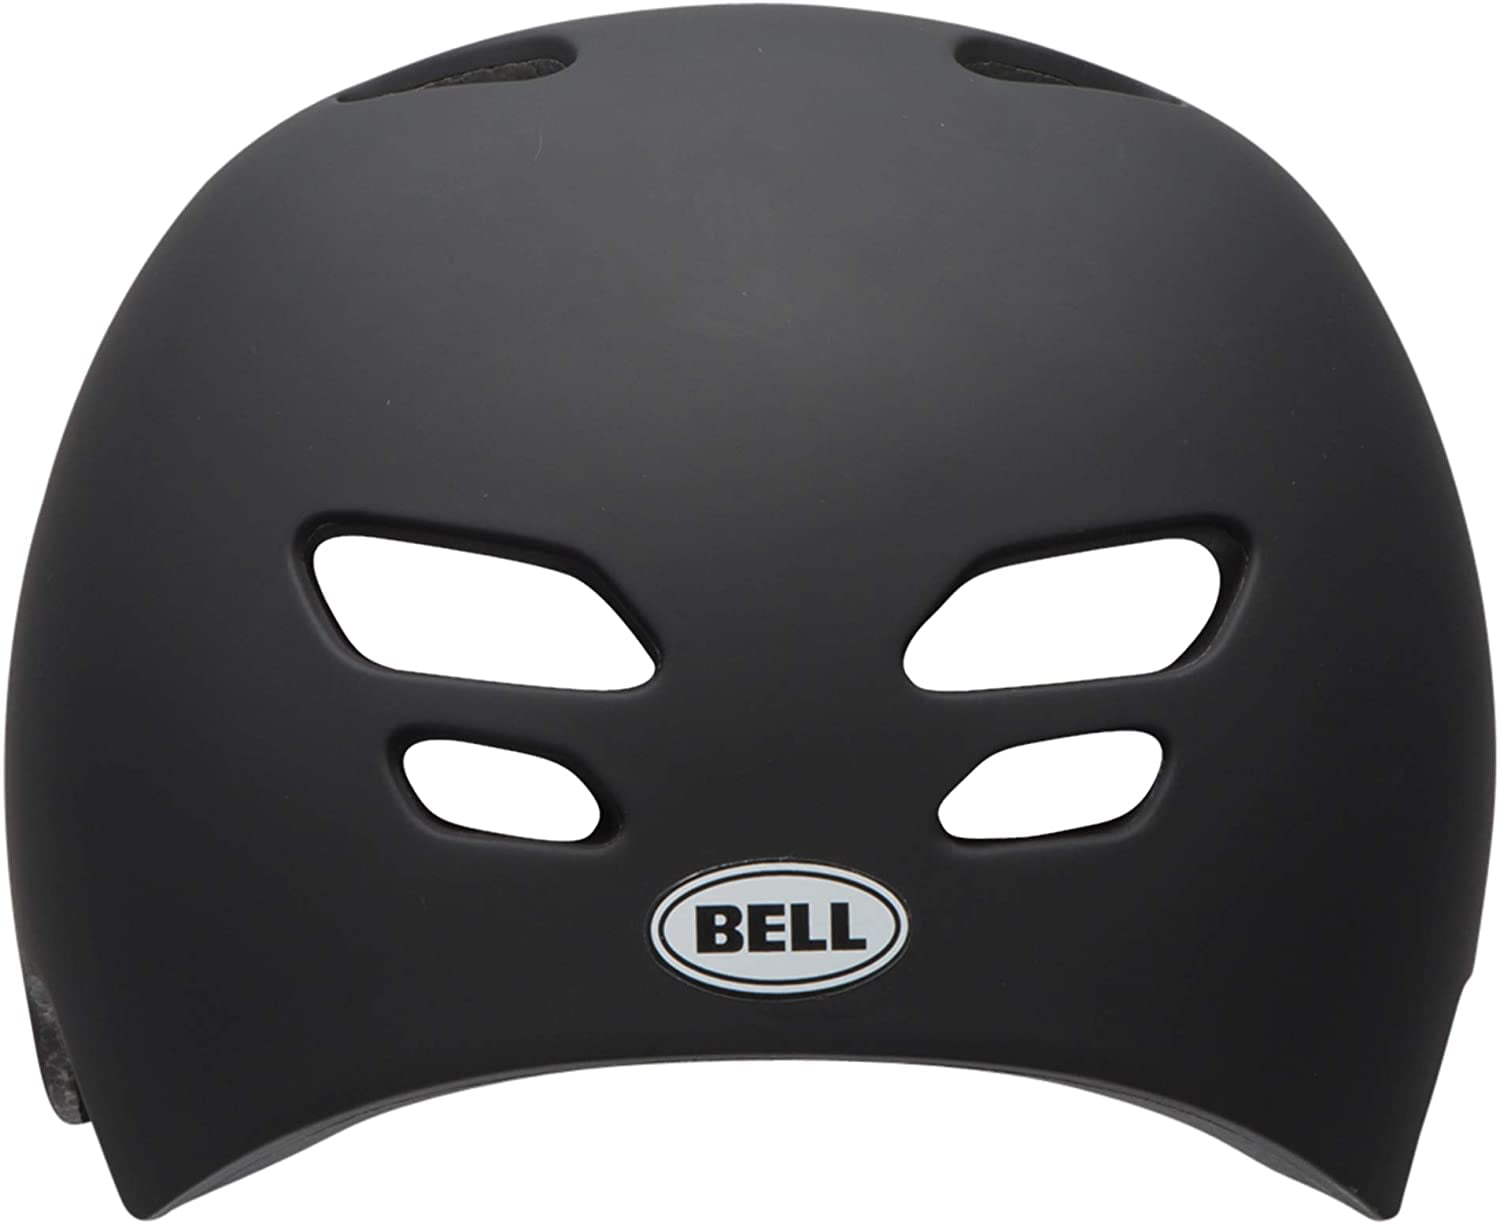 Bell 7049833 Adult Manifold Bike Helmet, Matte Black, Fits head 